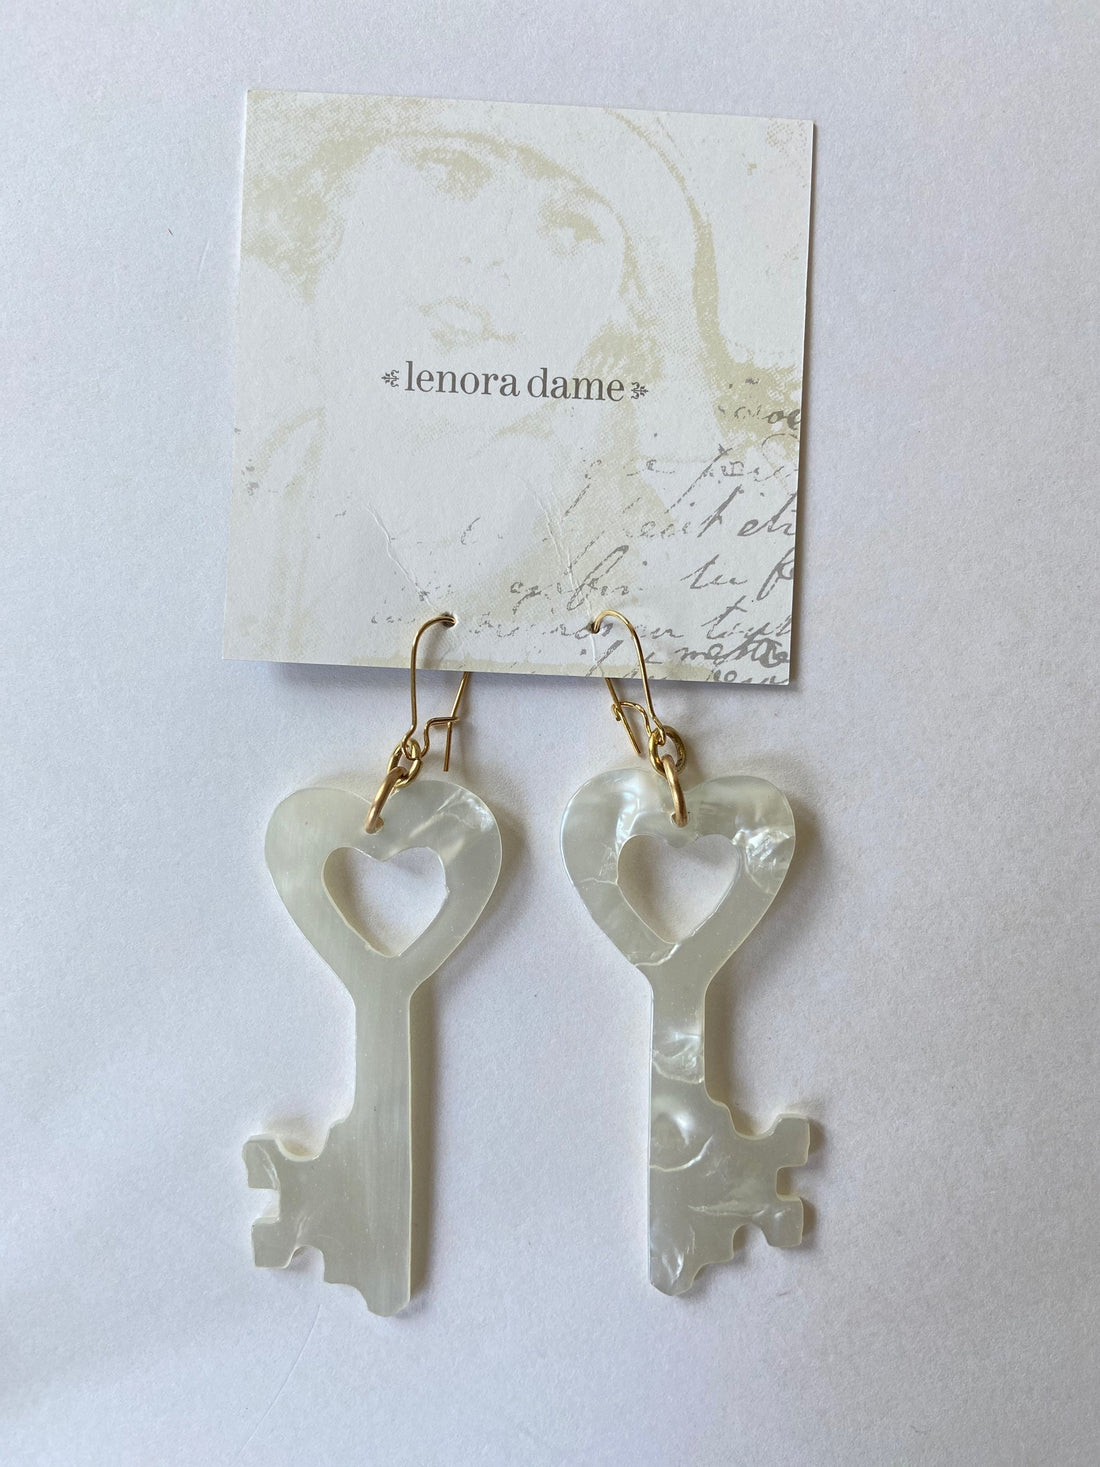 Lenora Dame Lock and Key Acrylic Earrings